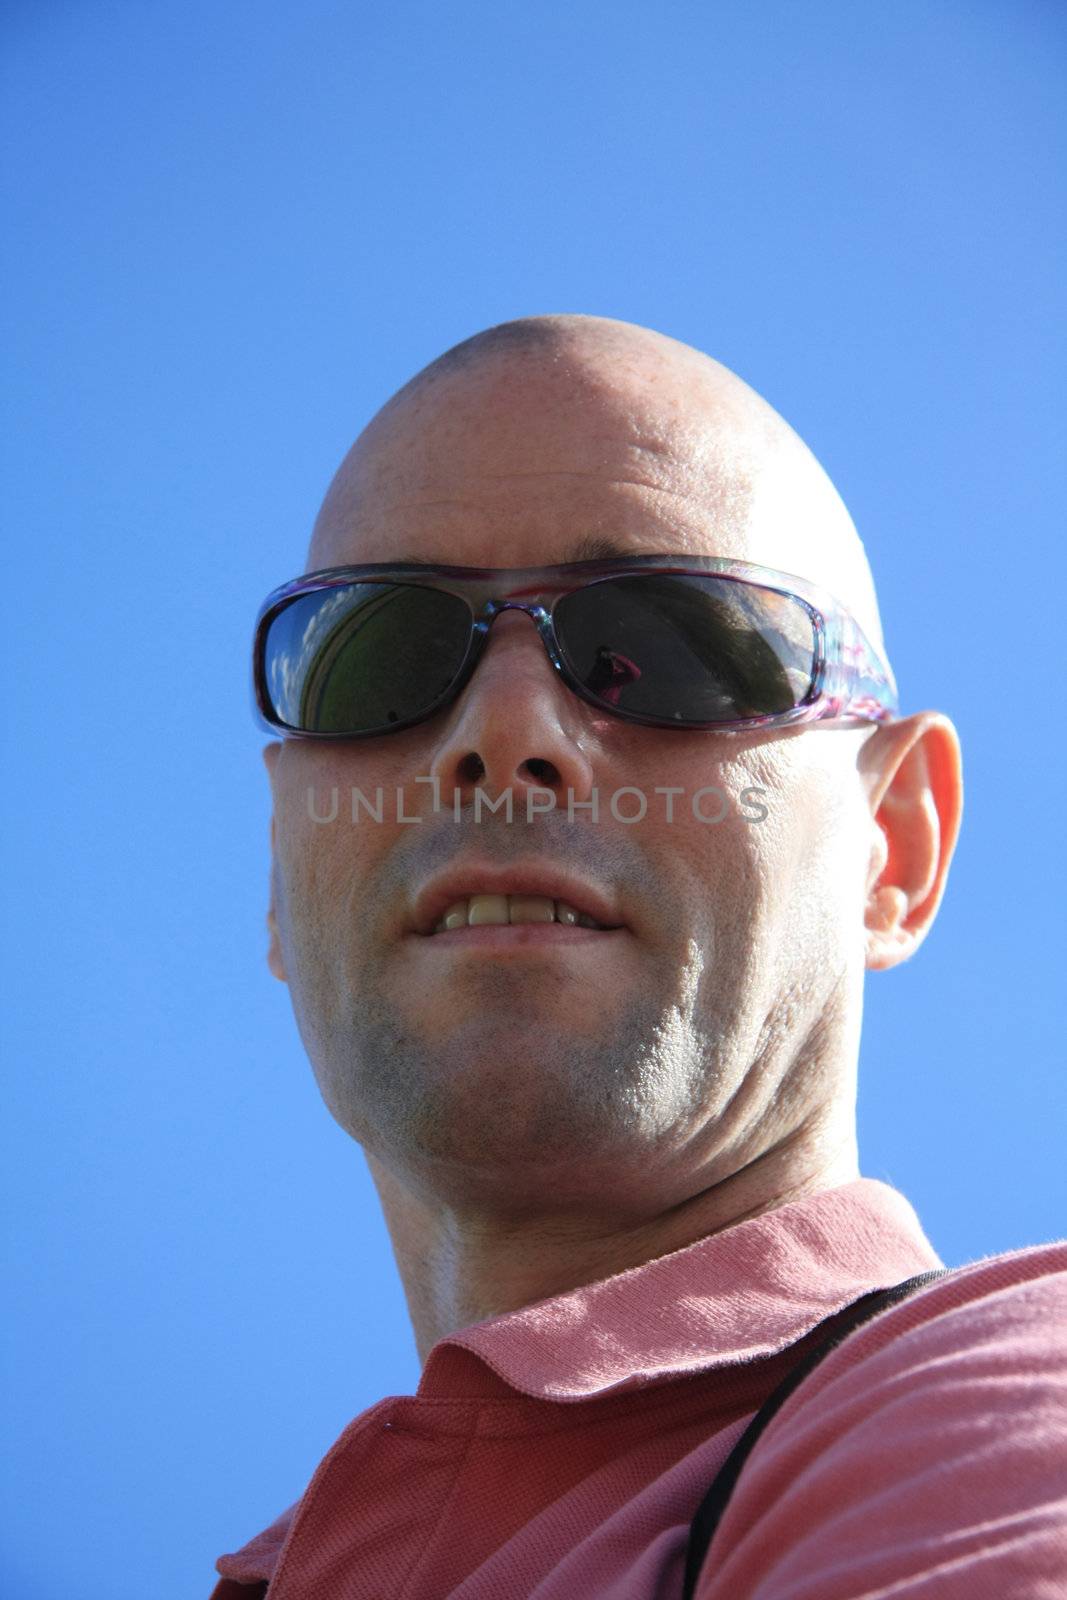 A bold caucasian man wearing sunglasses